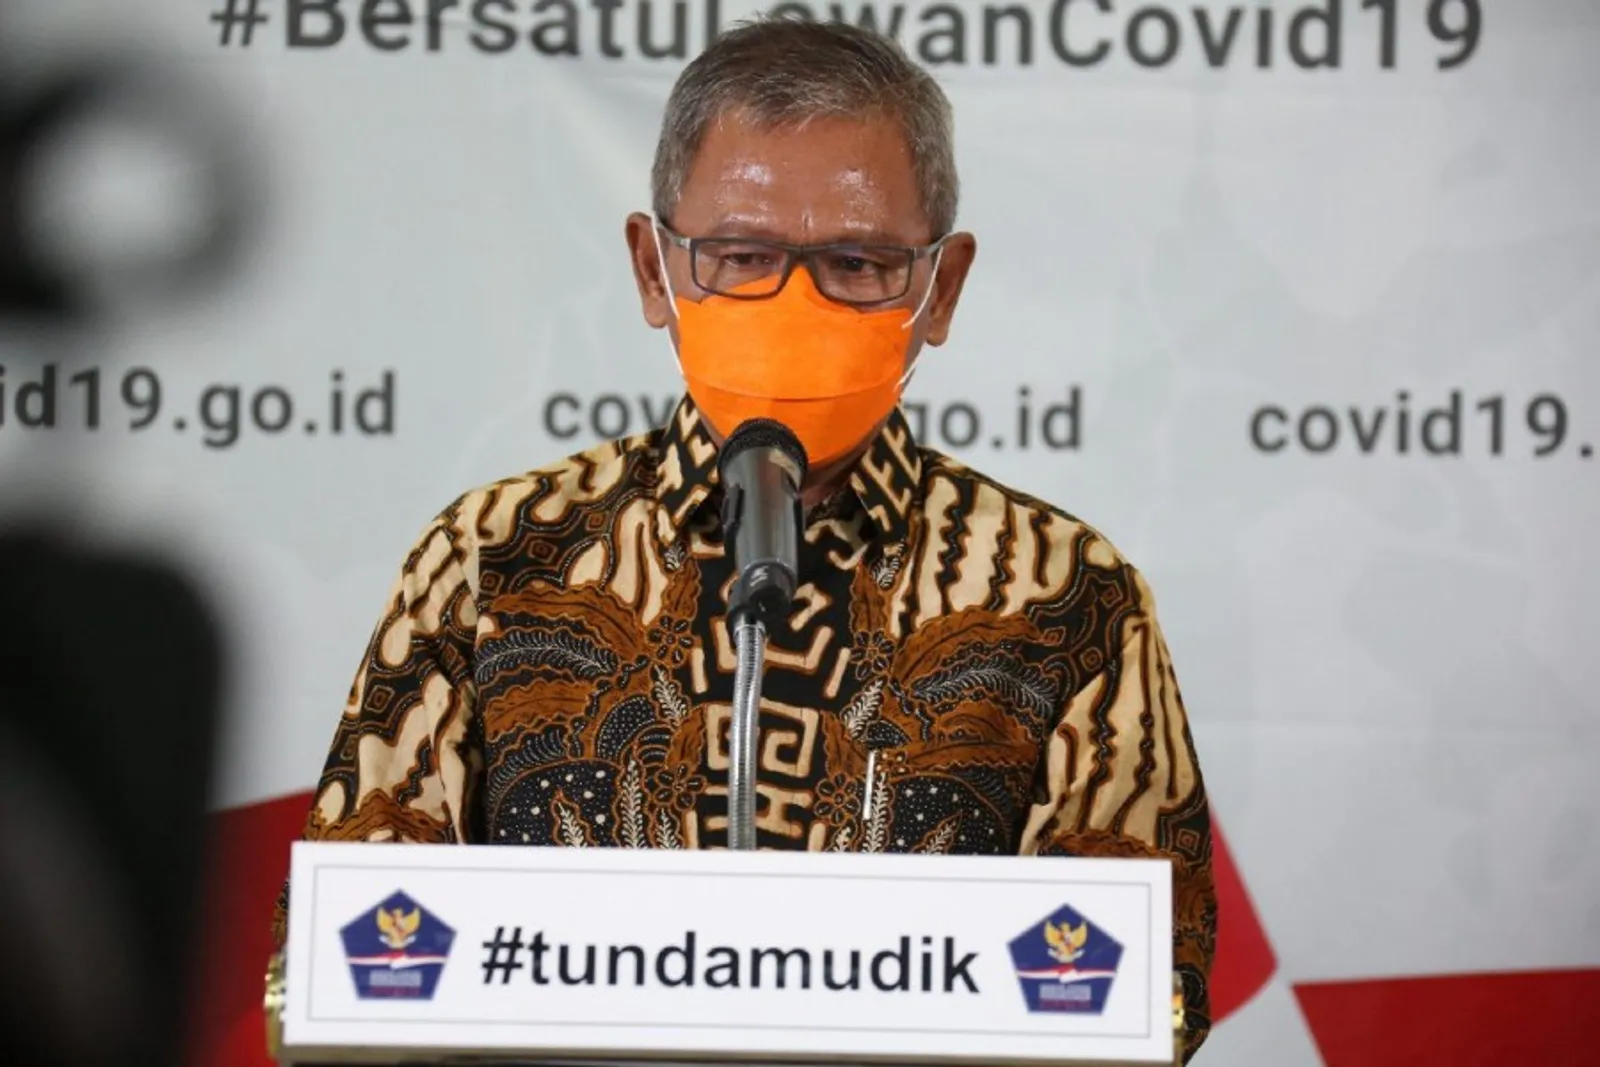 Wajib! Mulai Hari Ini Seluruh Warga Indonesia Harus Pakai Masker